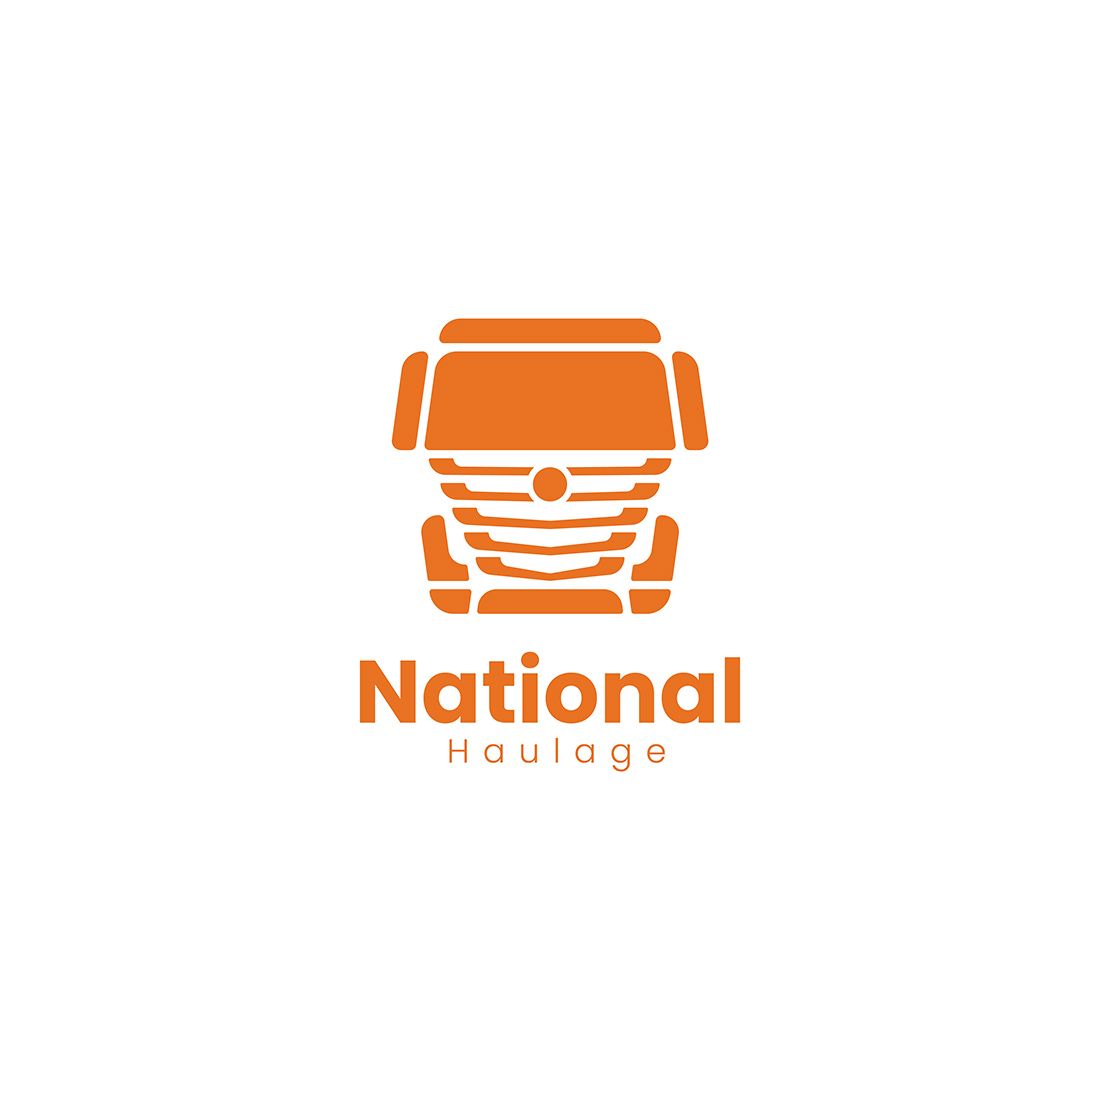 National Haulage Logo orange version.